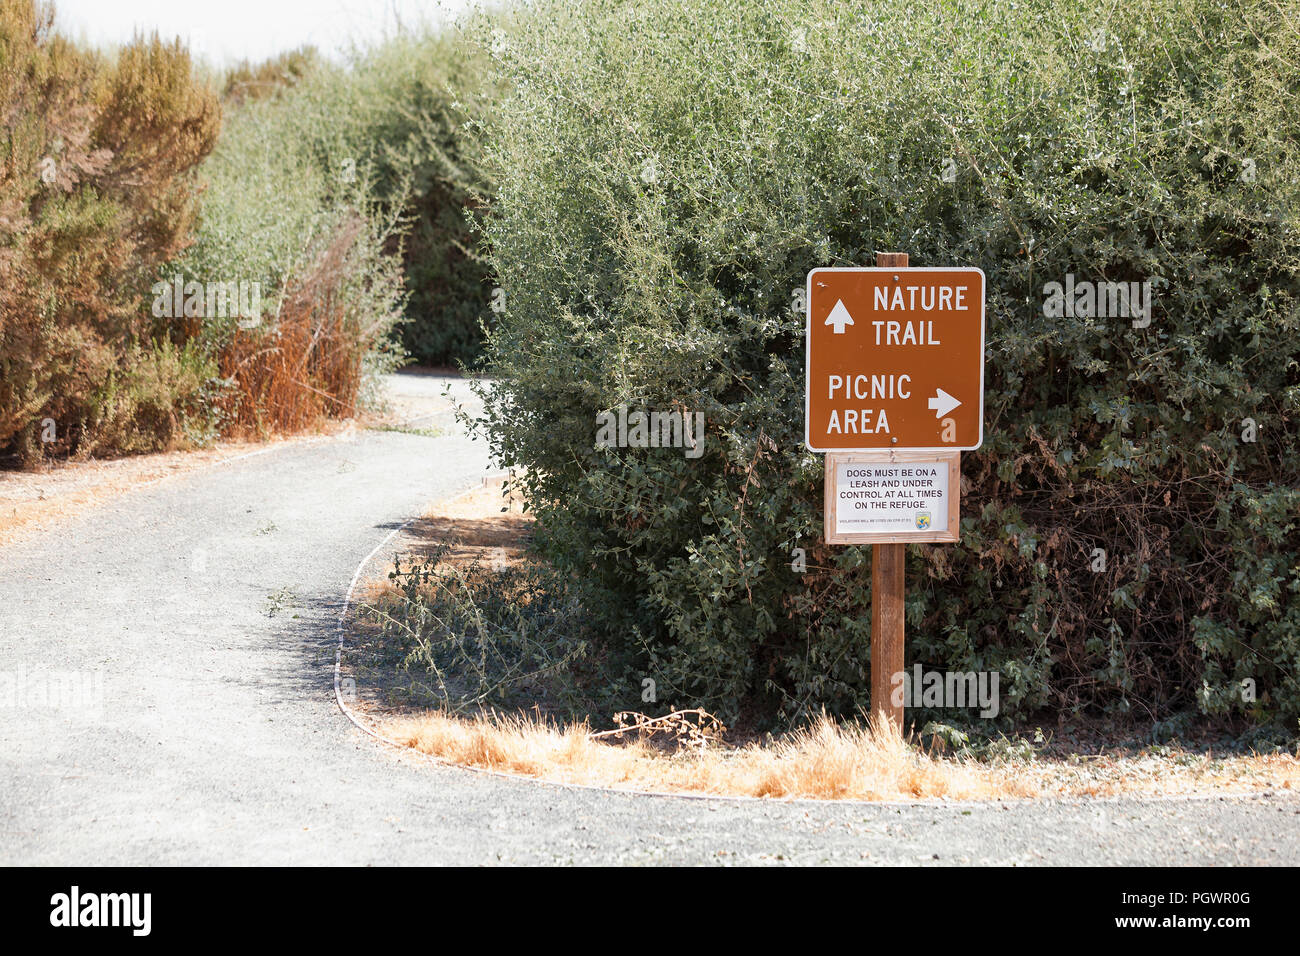 Nature trail and Picnic area sign - San Joaquin River National Wildlife Refuge, California USA Stock Photo